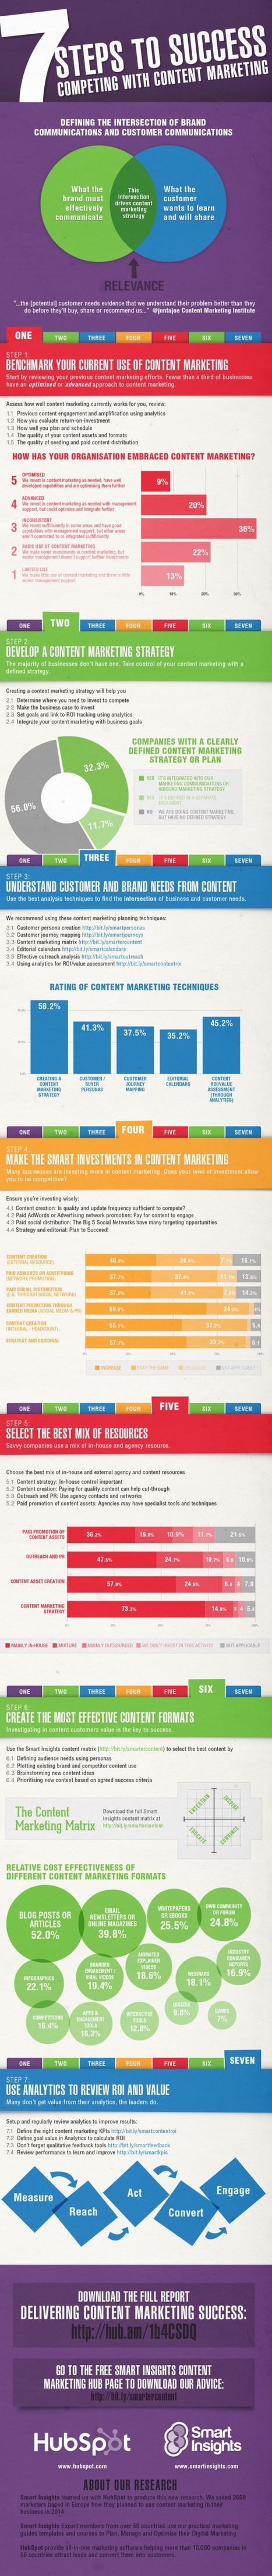 7 Steps to Content Marketing Success [Infographic] - Smart Insights  | #TheMarketingTechAlert | The MarTech Digest | Scoop.it